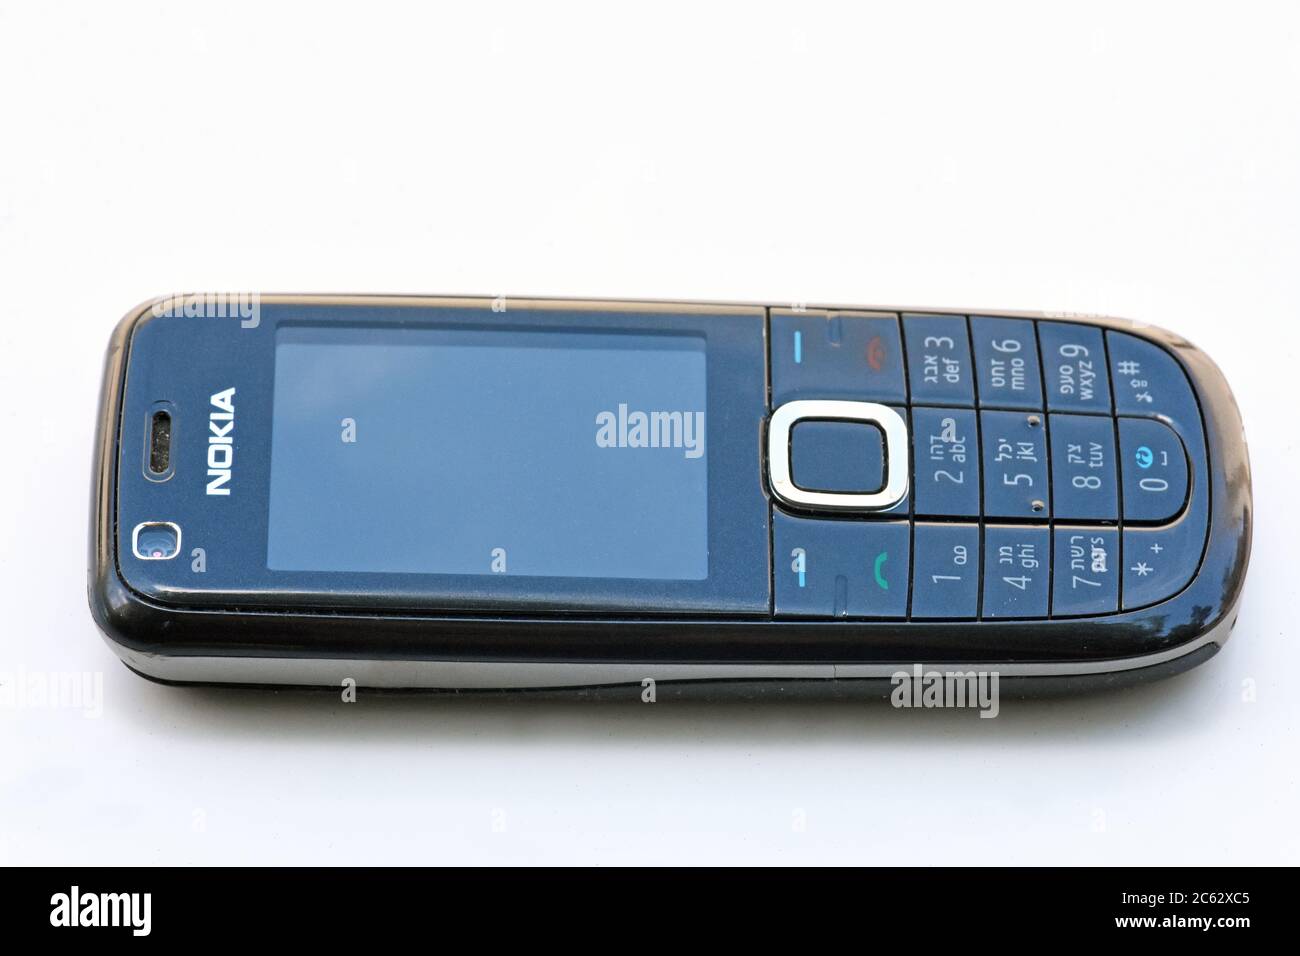 Old Nokia Mobile phone Stock Photo